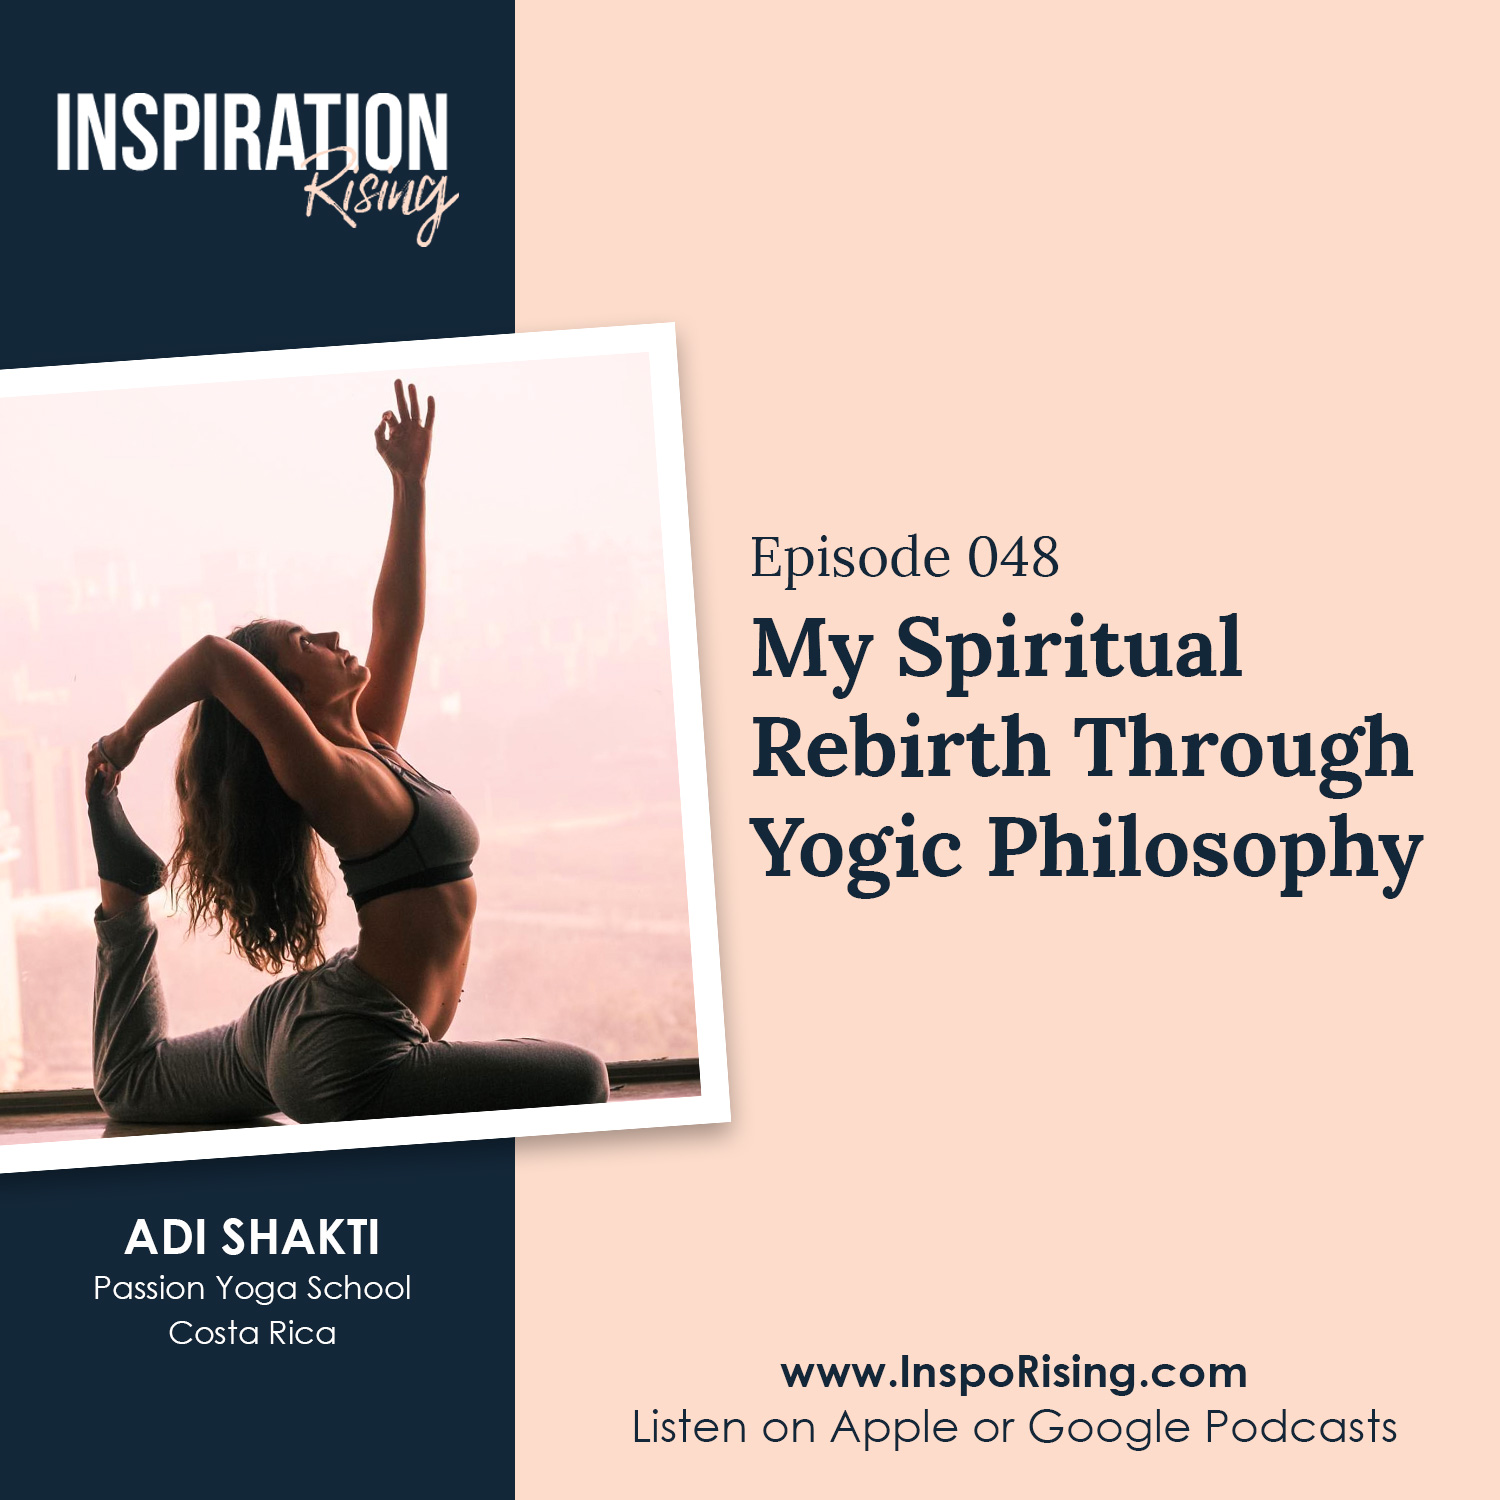 Adi Shakti - Soul Work Passion Yoga School